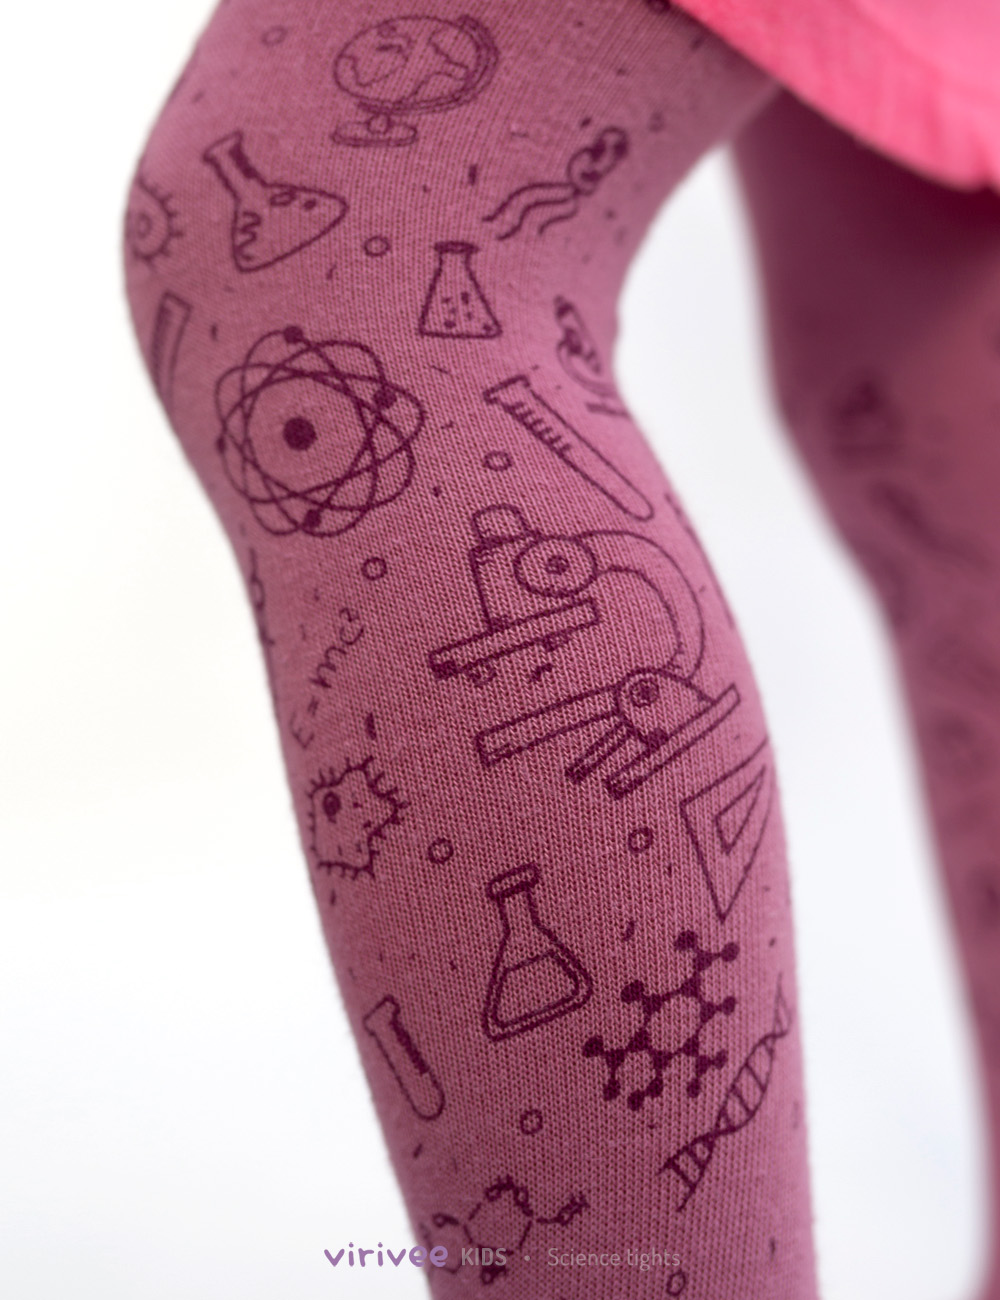 Science, mathematics, biology, physics themed tights